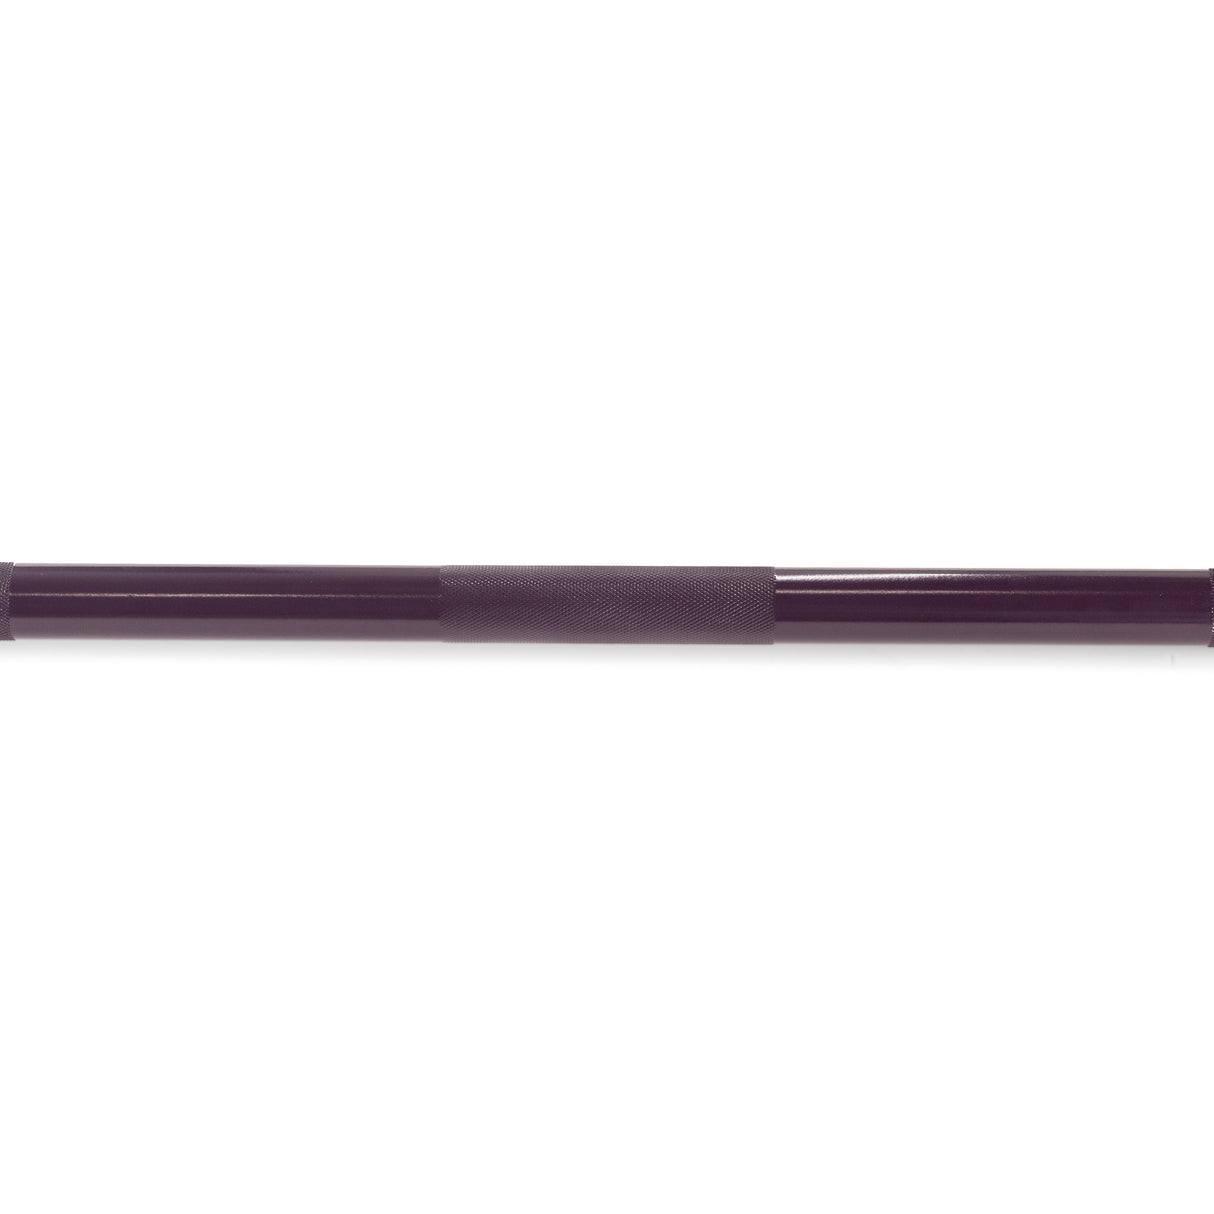 Mutli-purpose Olympic Barbell- The Utility Bar - Hydra Purple knurling